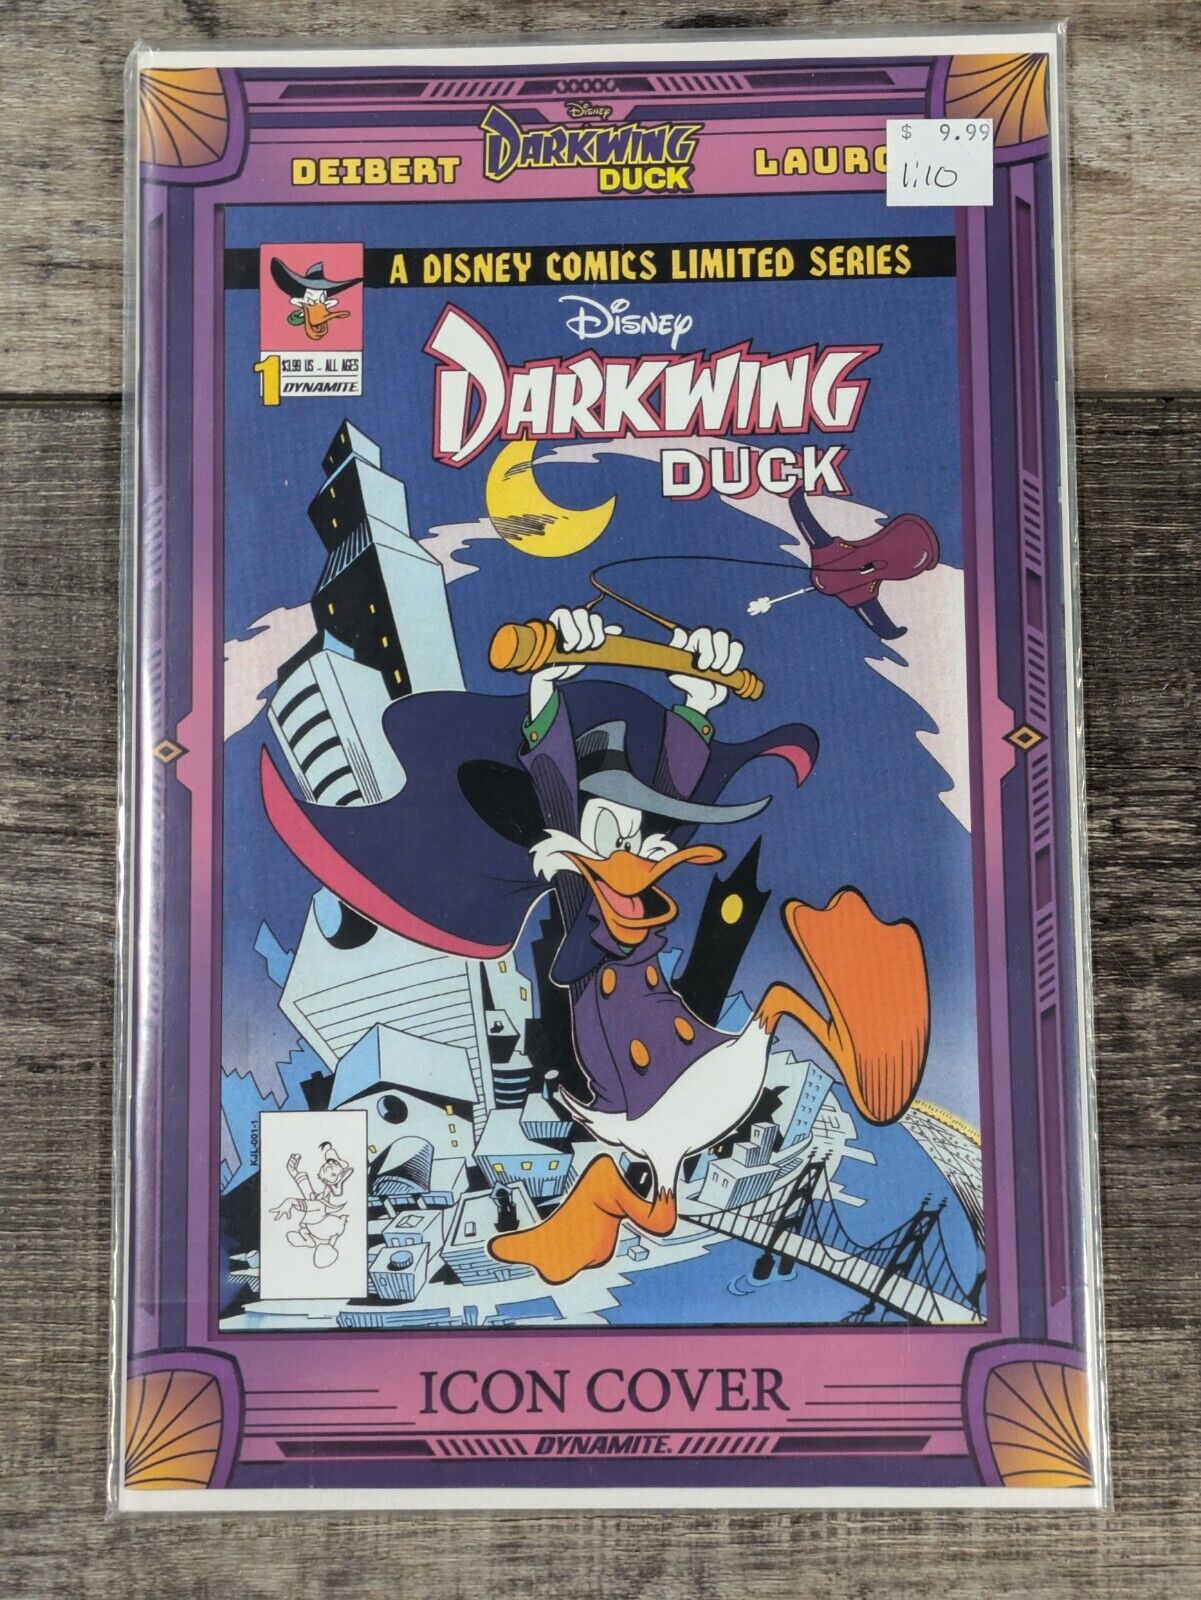 Dynamite Comics Darkwing Duck #1 - Comic Book New NM 1:10 ICON